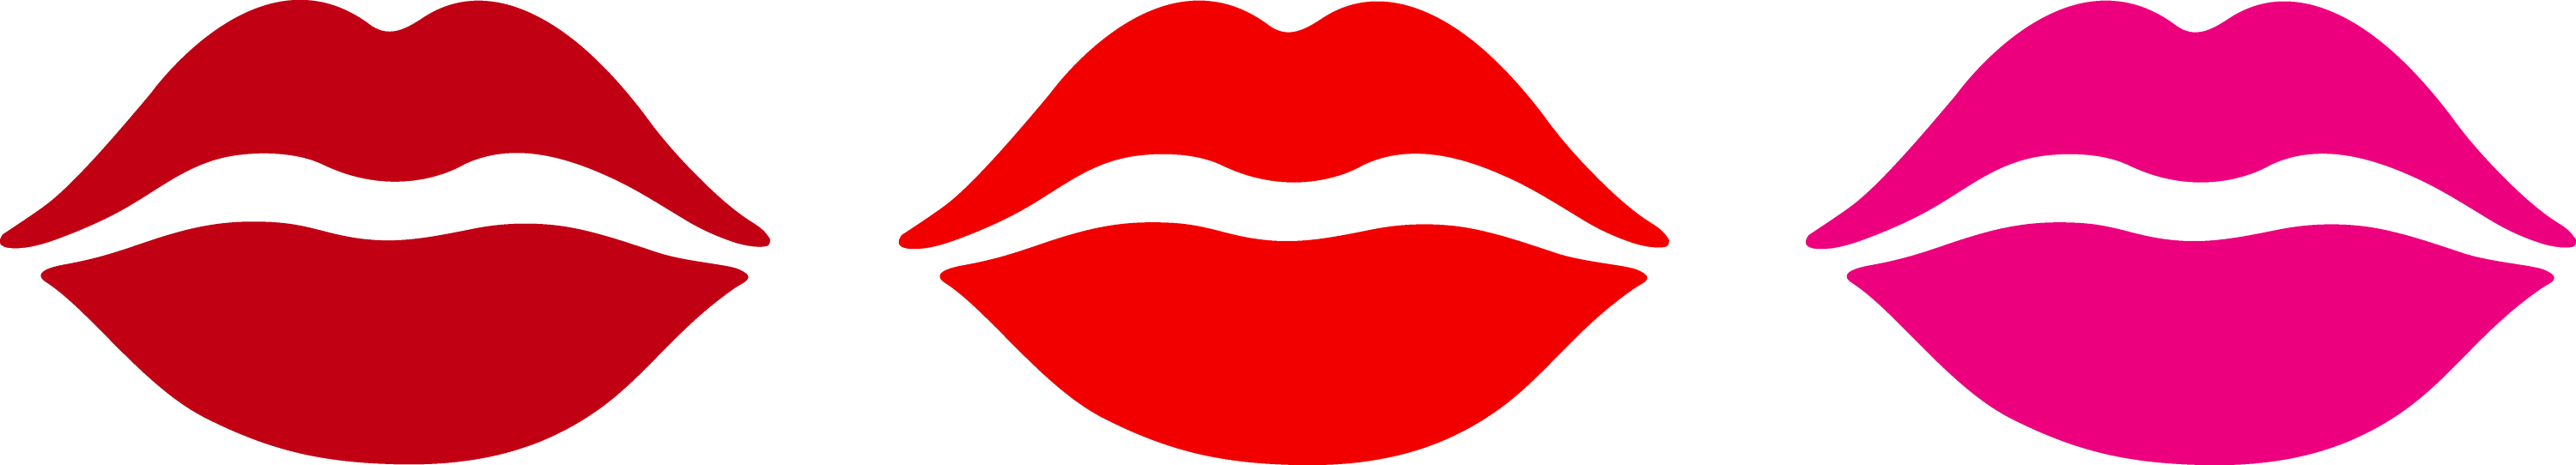 kissing lips clipart free - photo #9